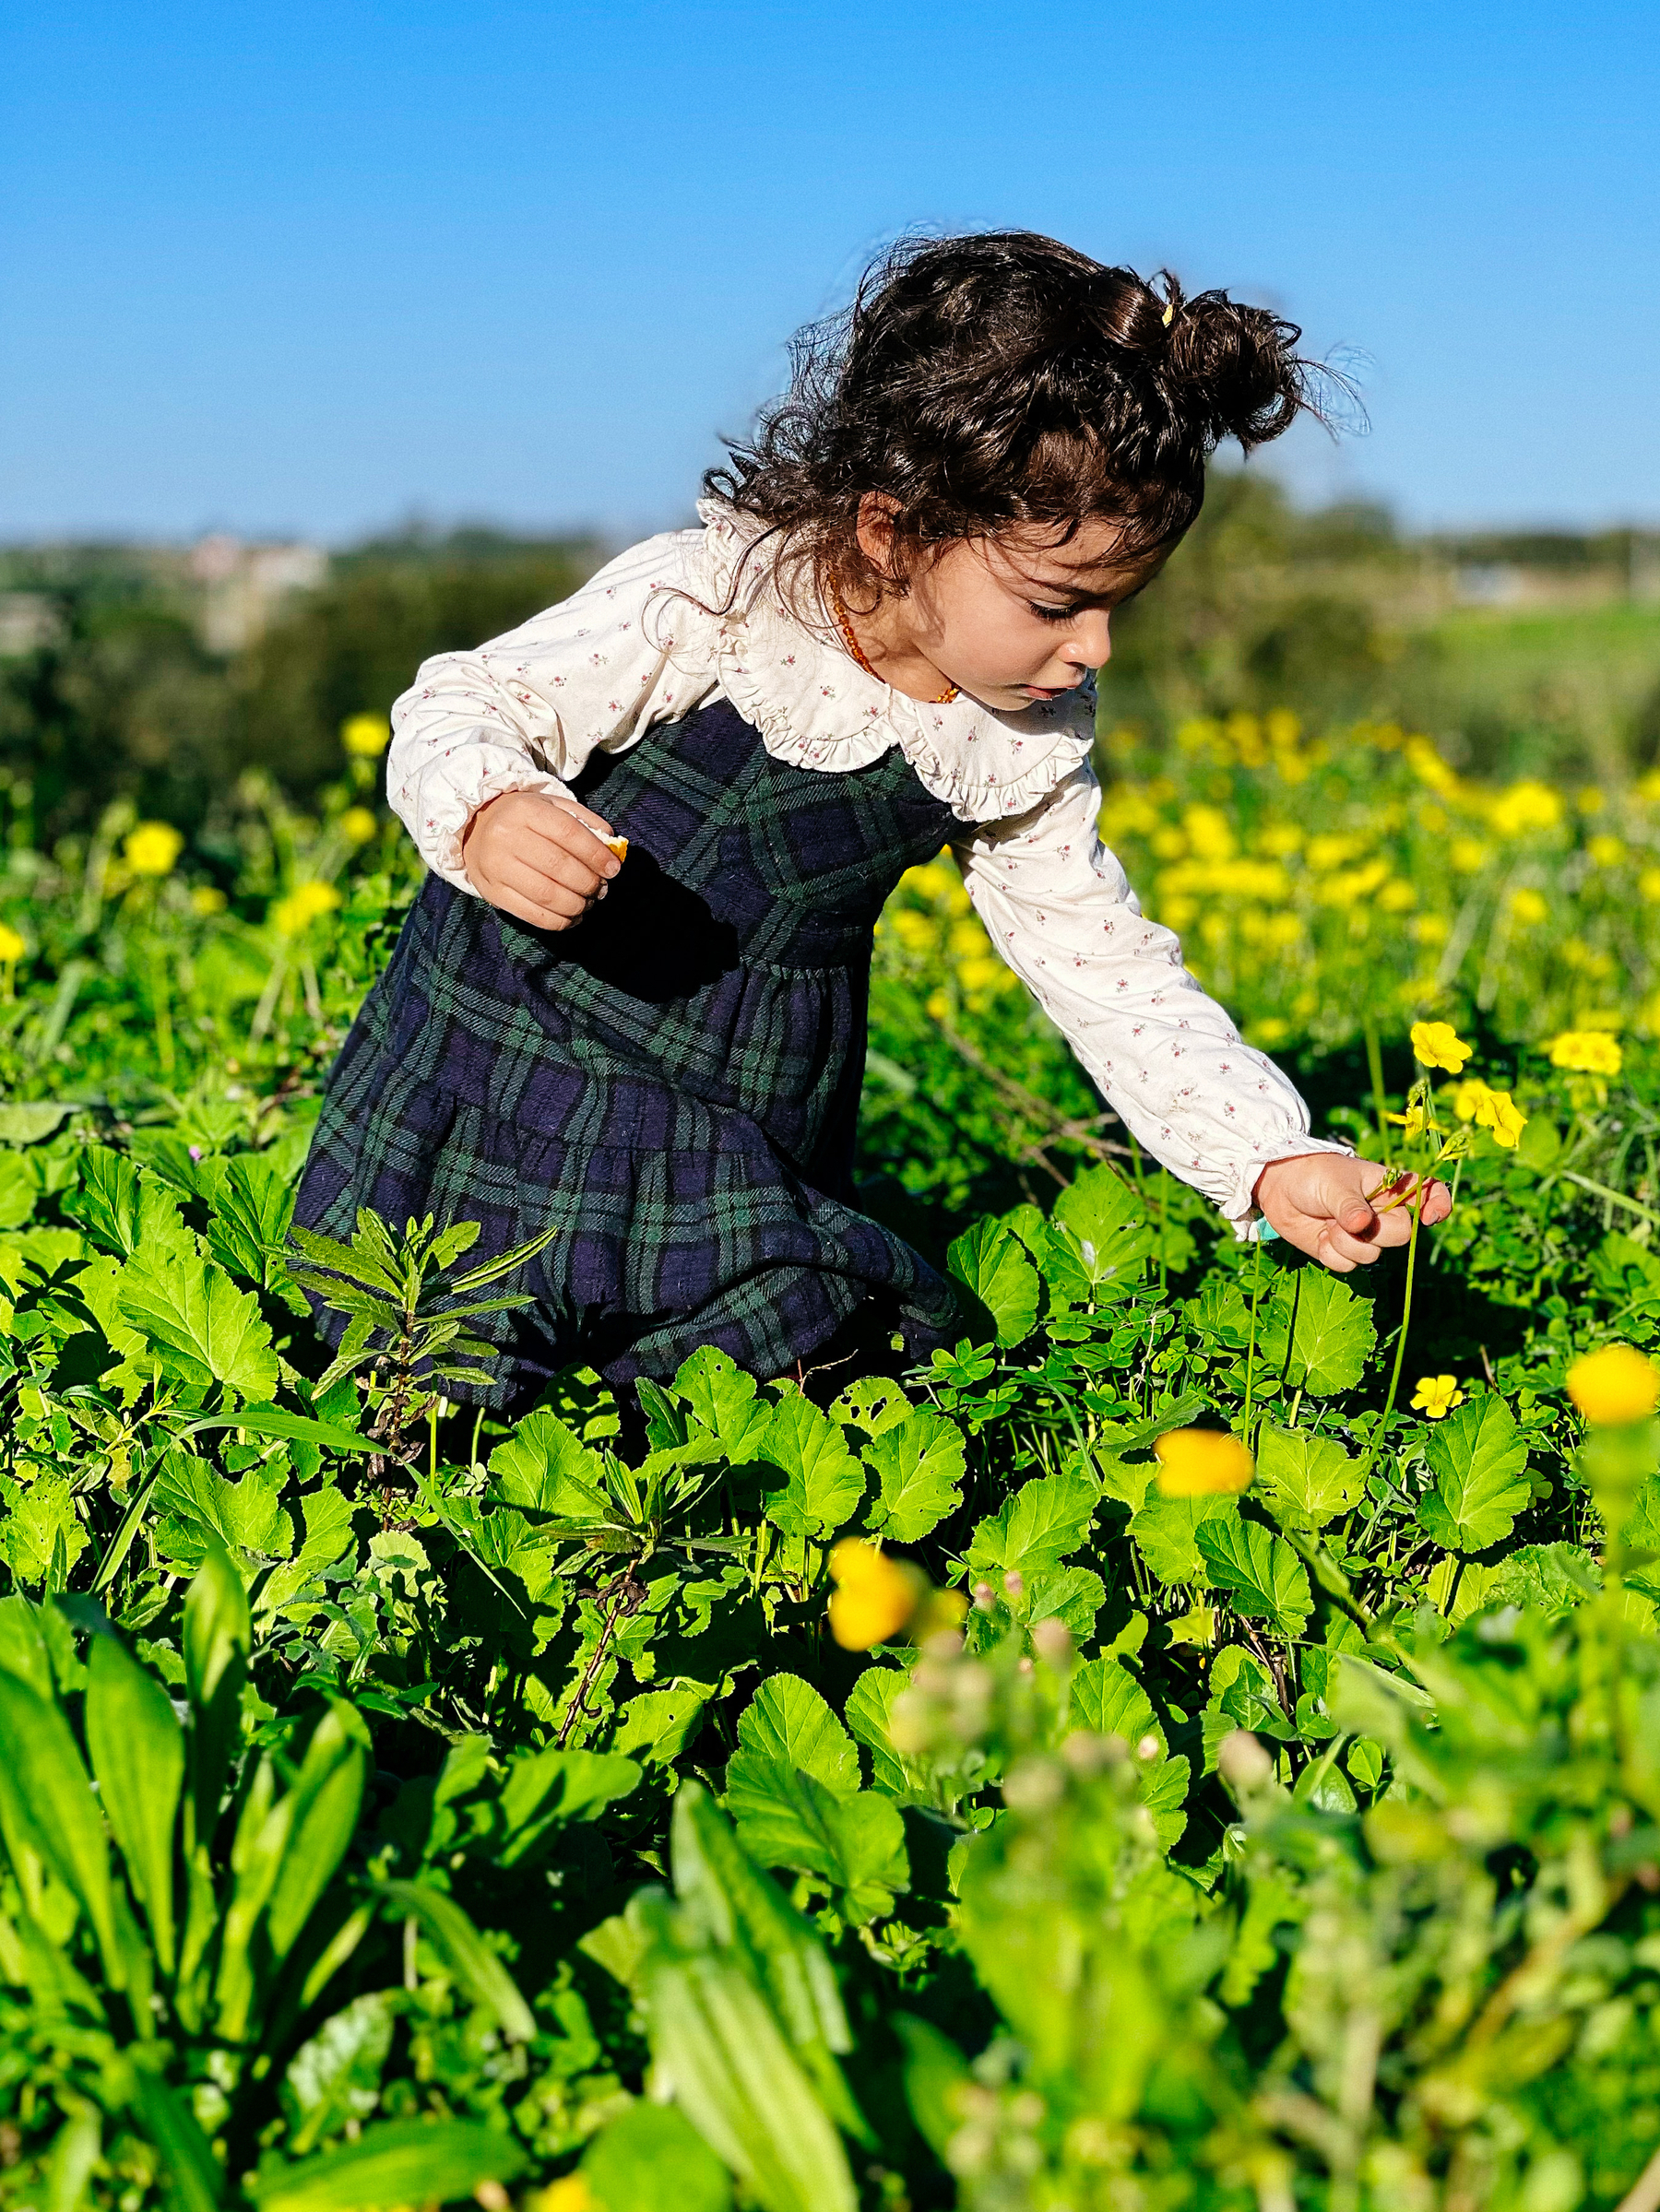 A girl picks flowers in a field of green 